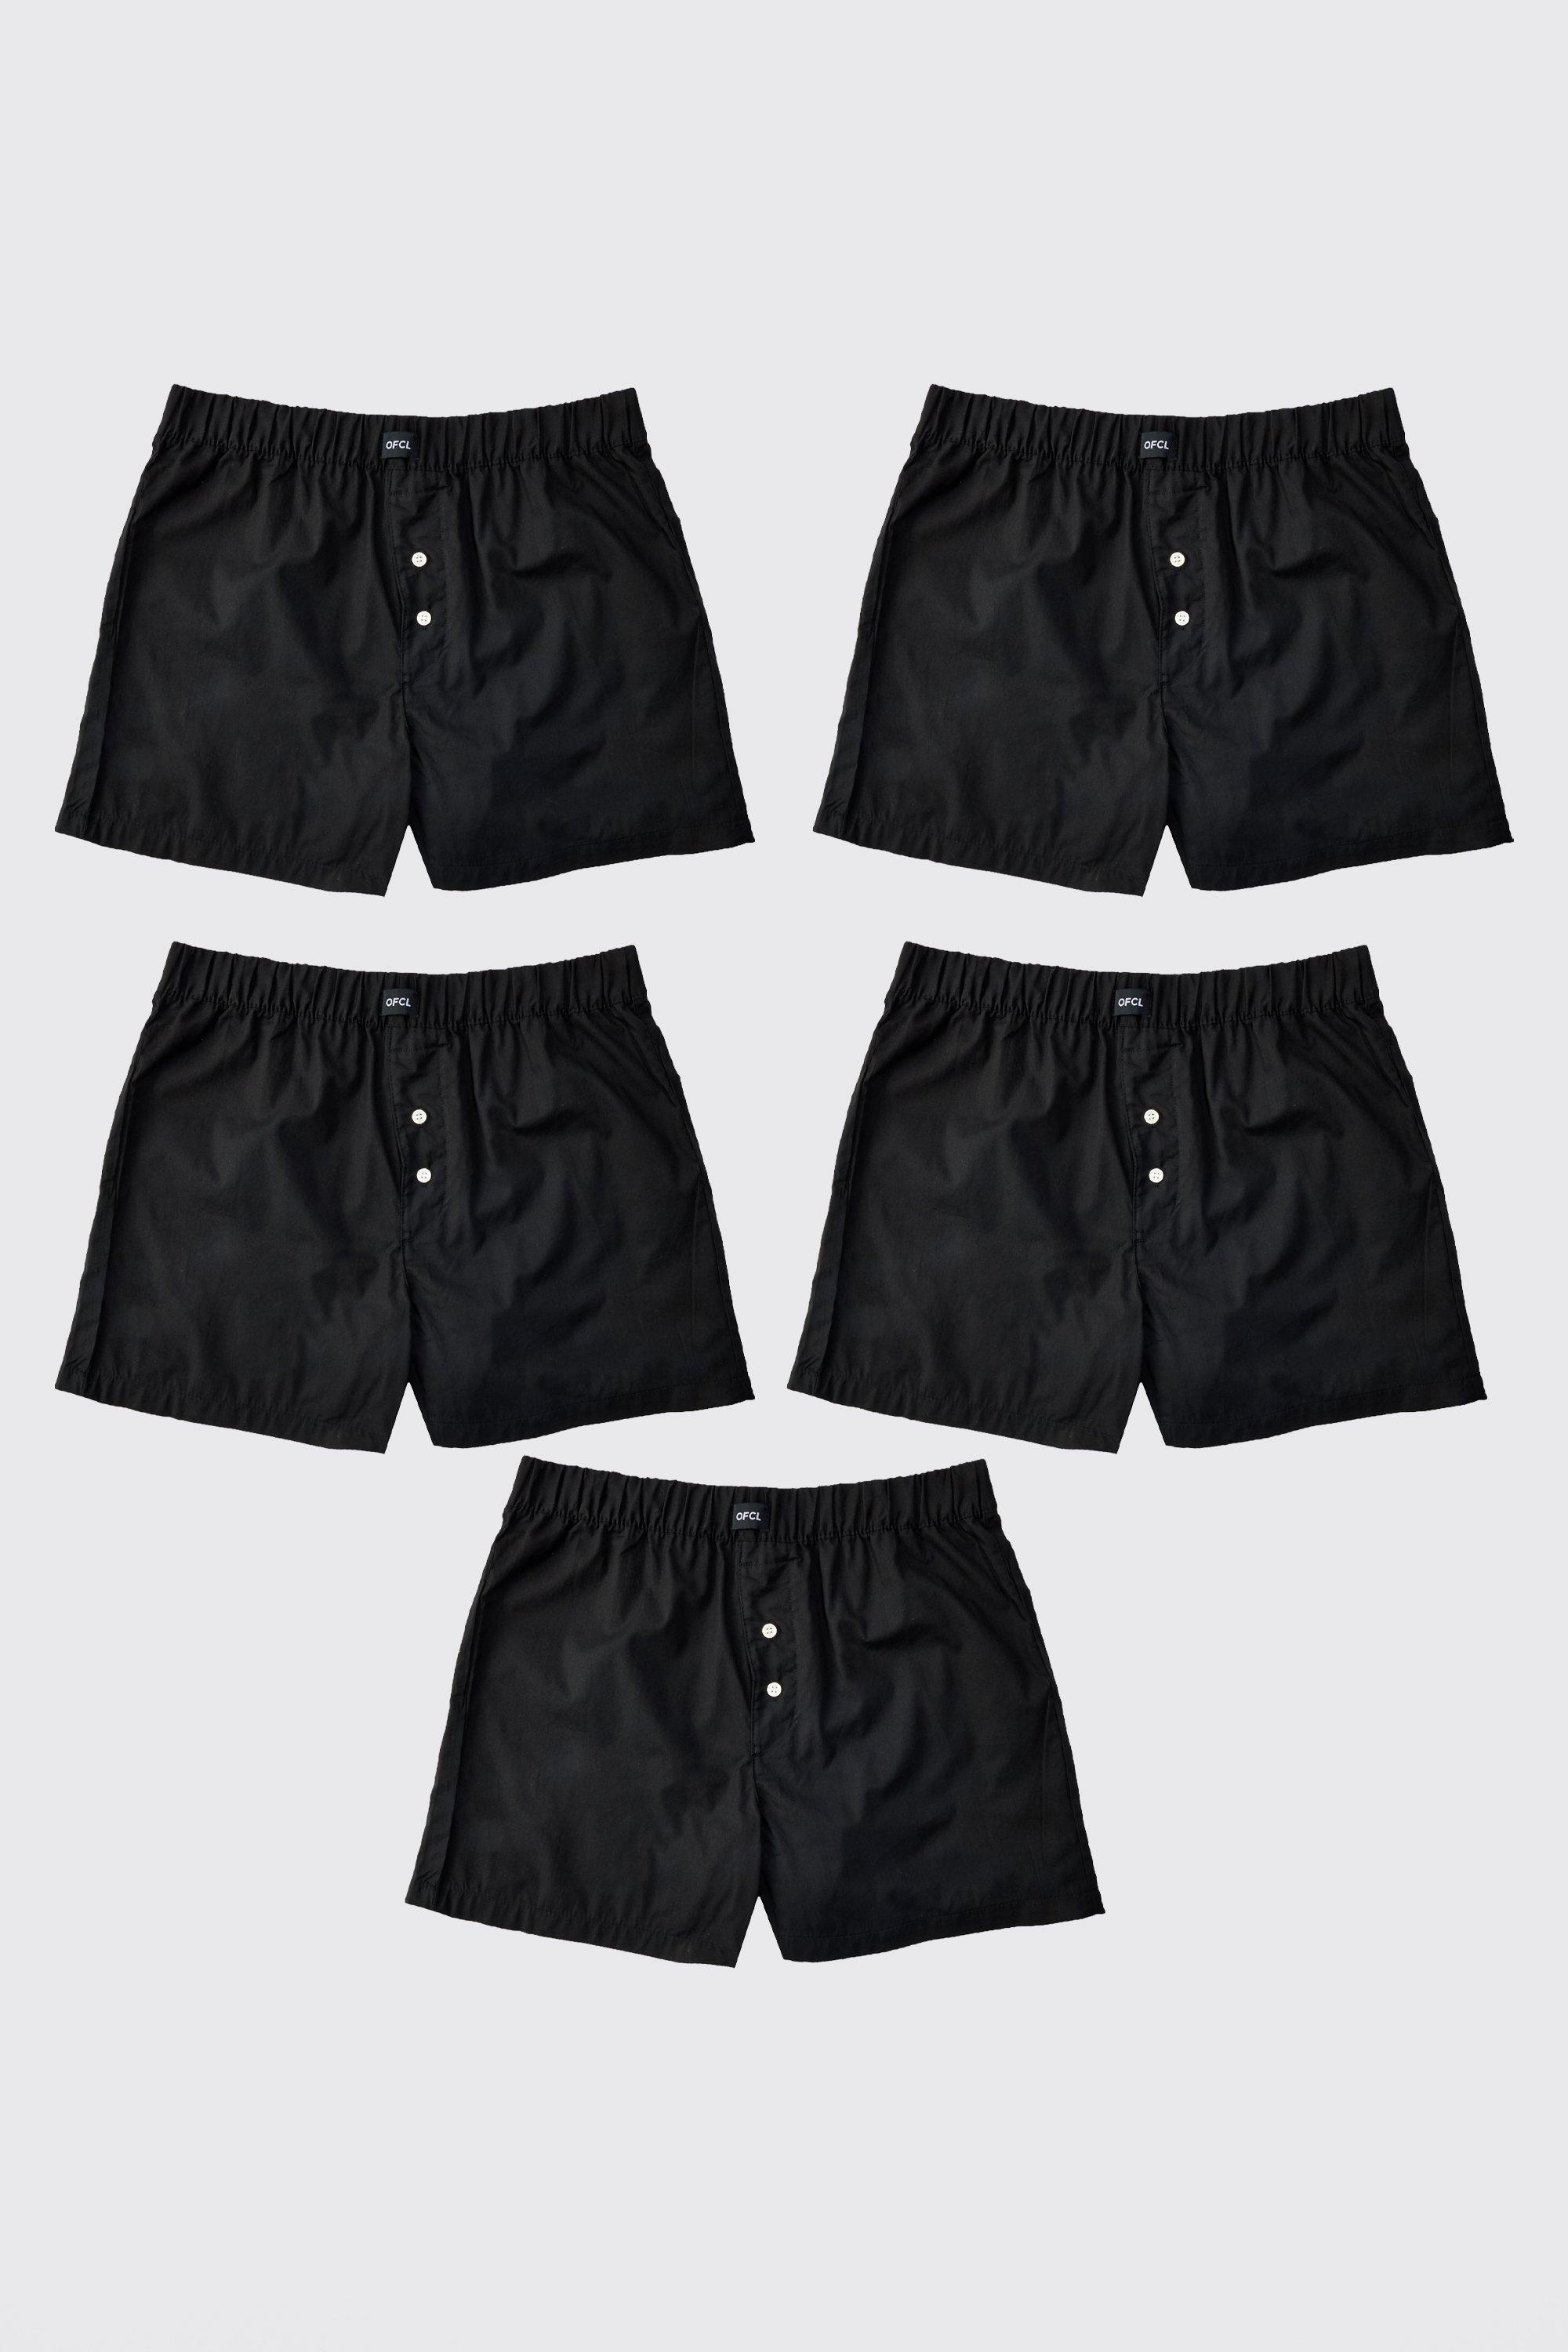 Mens Black 3 Pack Ofcl Woven Boxer Shorts, Black